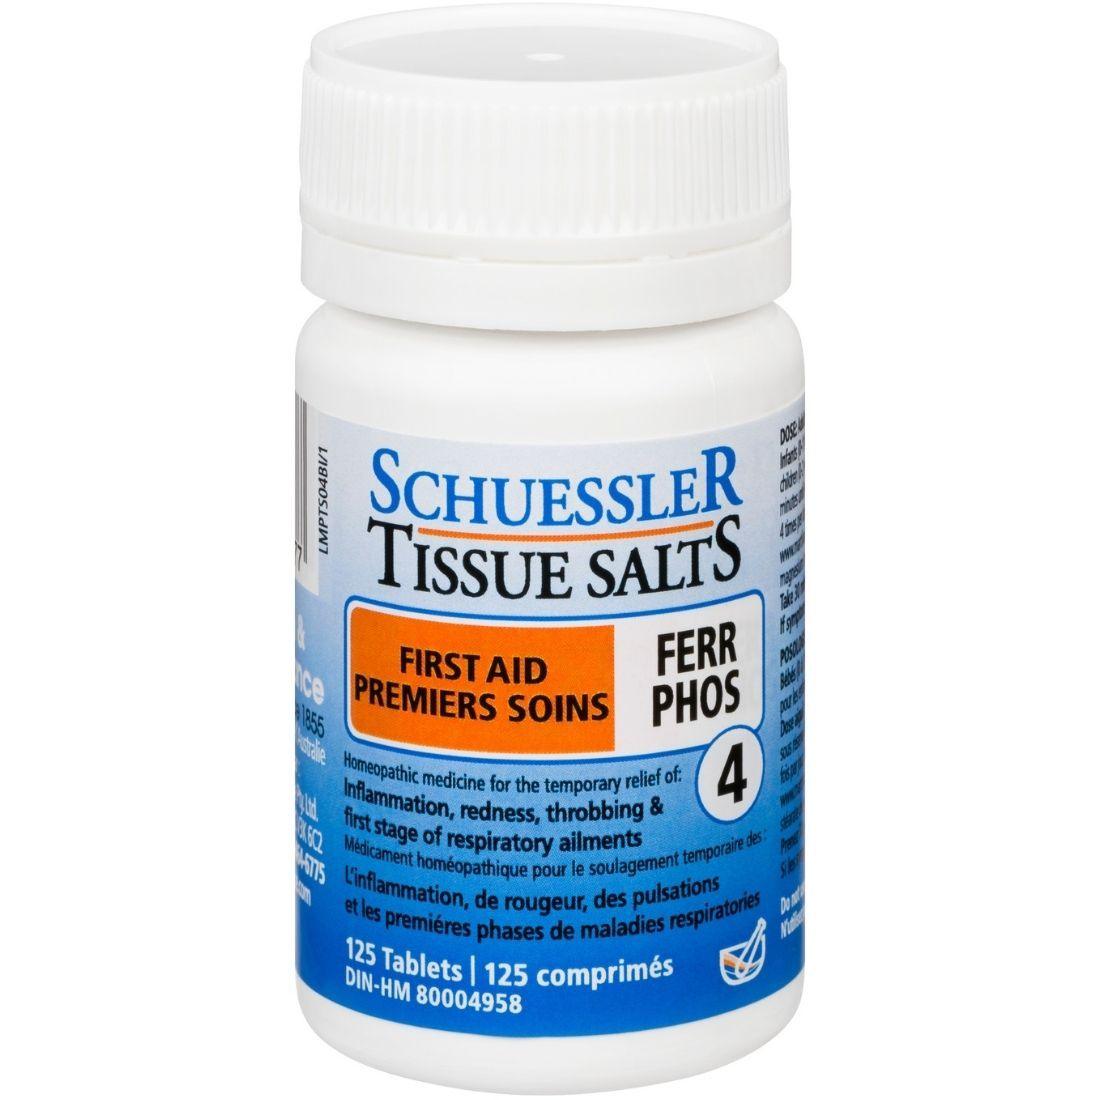 Schuessler Tissue Salts First Aid Ferr Phos #4 125 Tabs Homeopathic at Village Vitamin Store